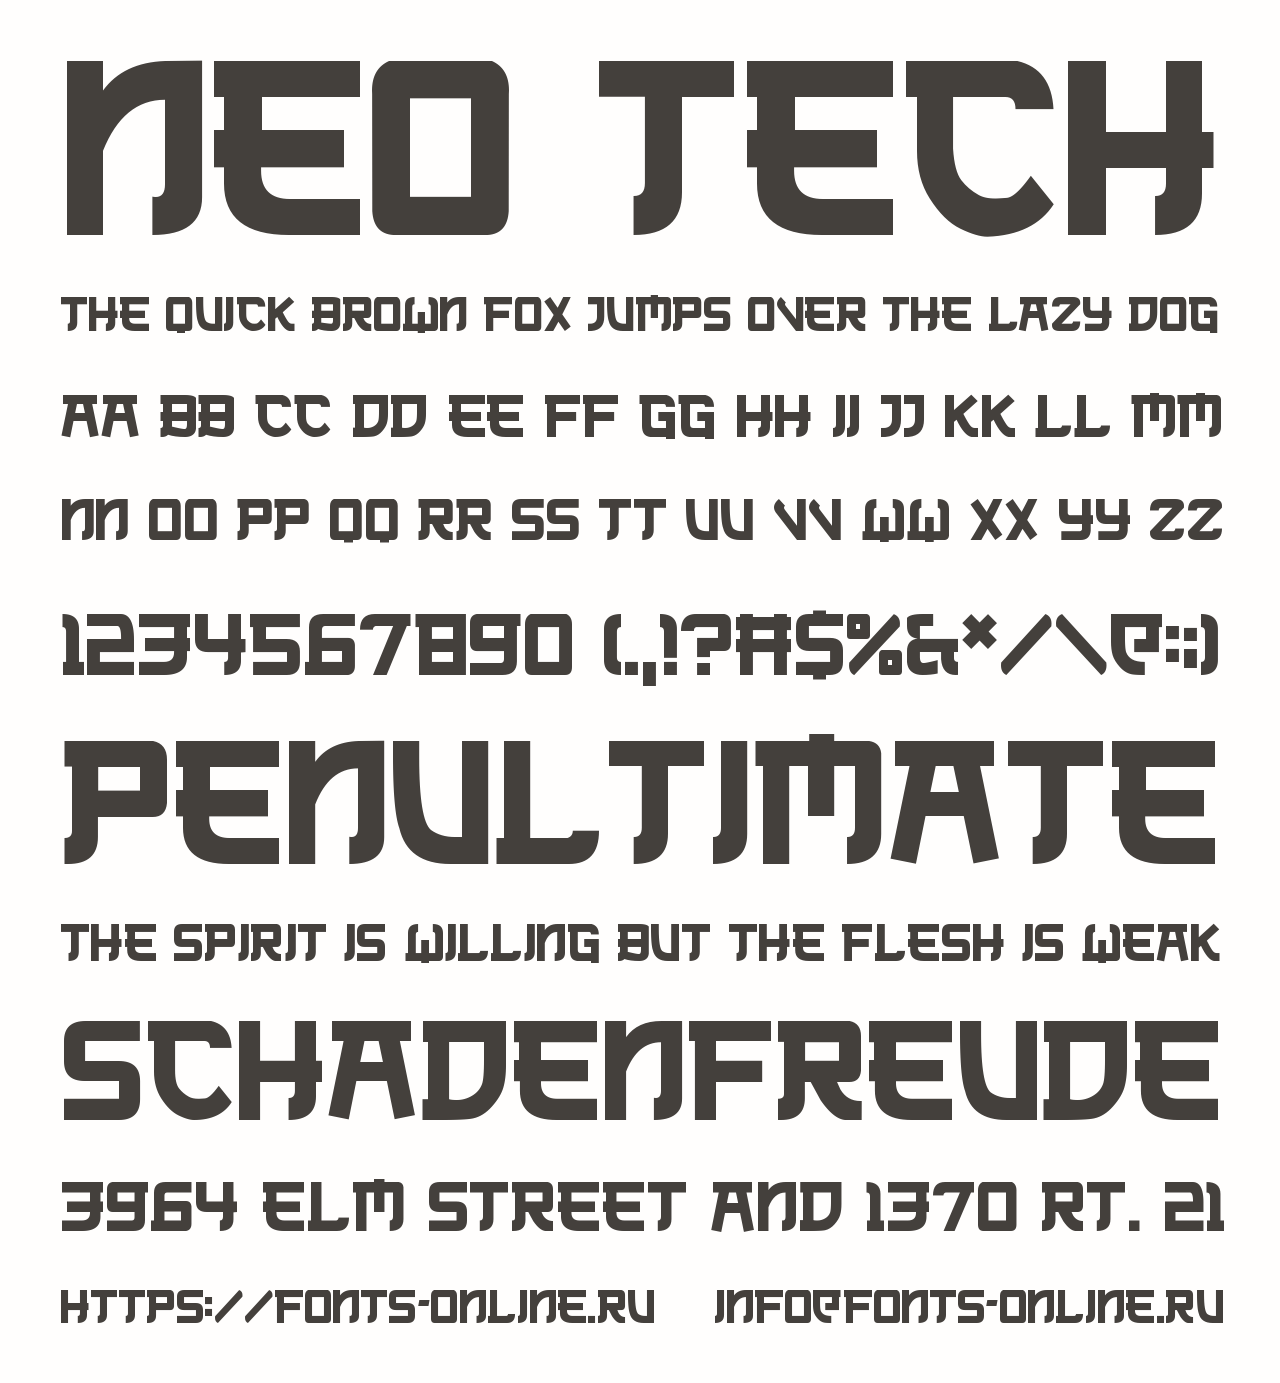 Шрифт Neo Tech